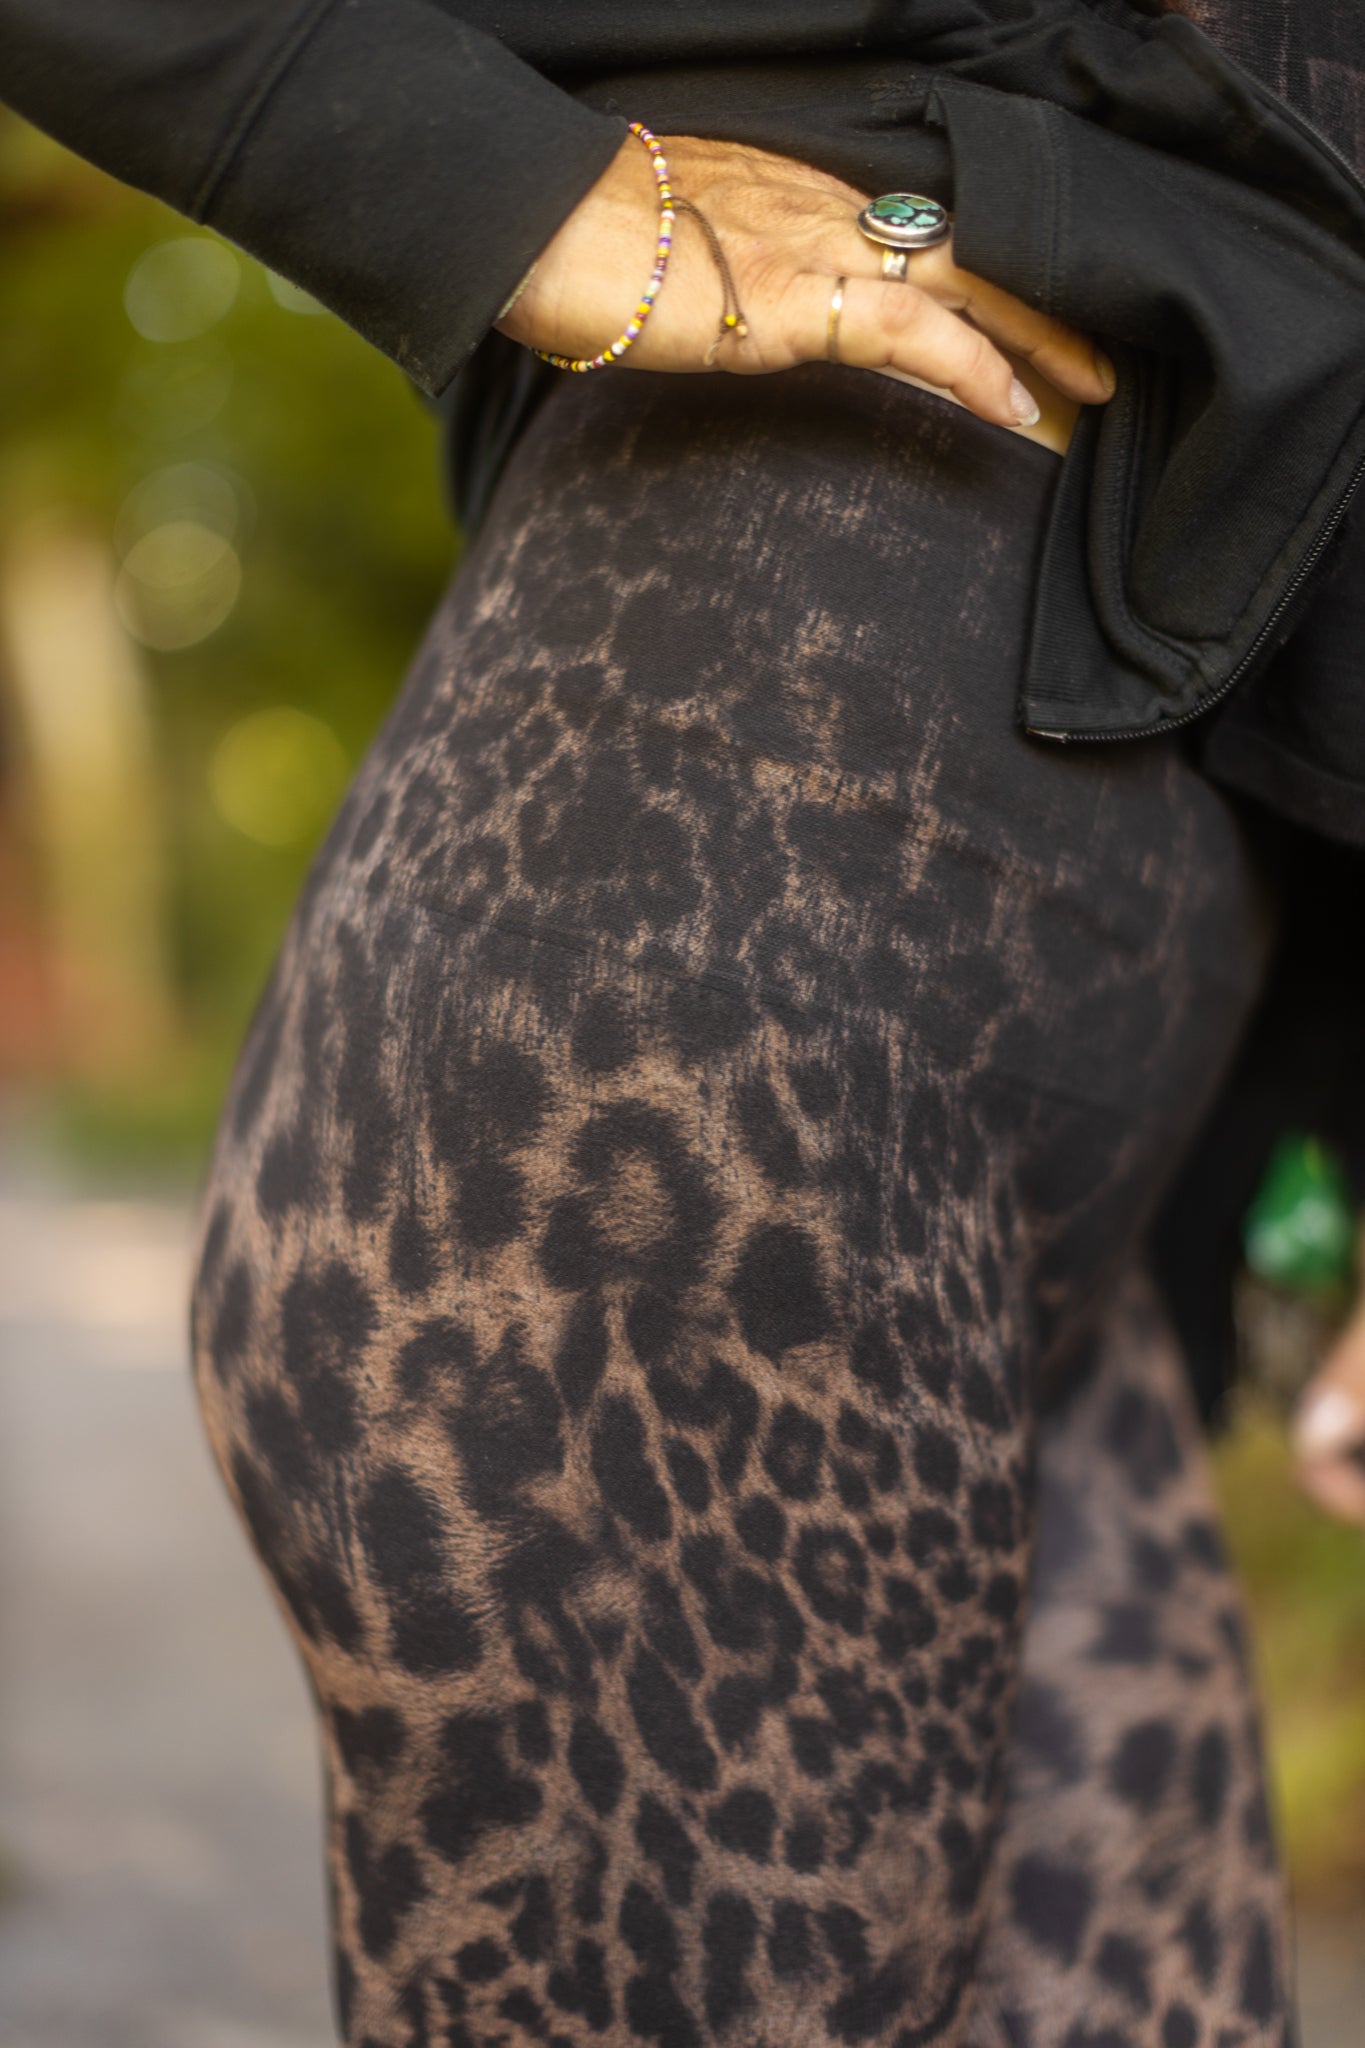 Stylish Black Cheetah Print Leggings